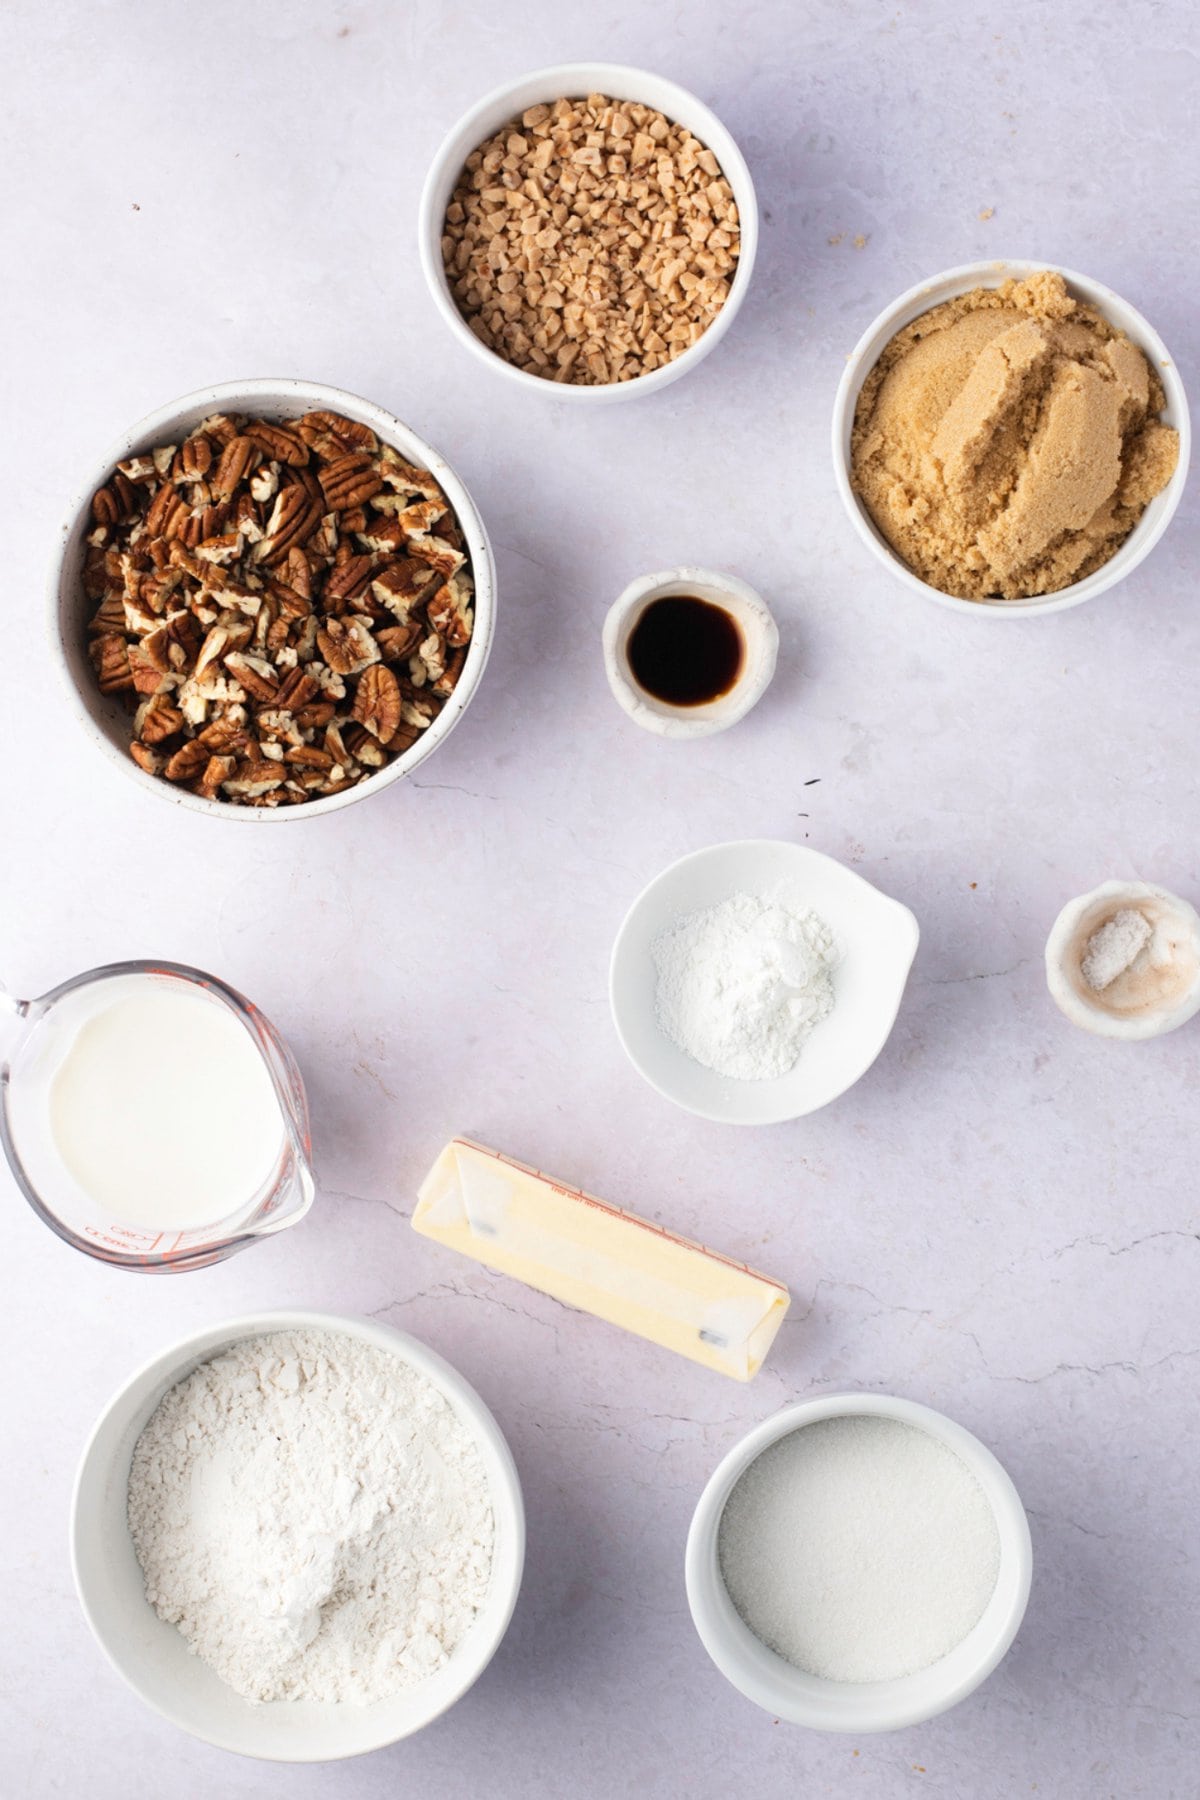 Pecan Pie Cobbler Ingredients - Butter, Flour, Sugar, Baking Powder, Milk, Pecans, Brown Sugar, Toffee Bits, Boiling Water